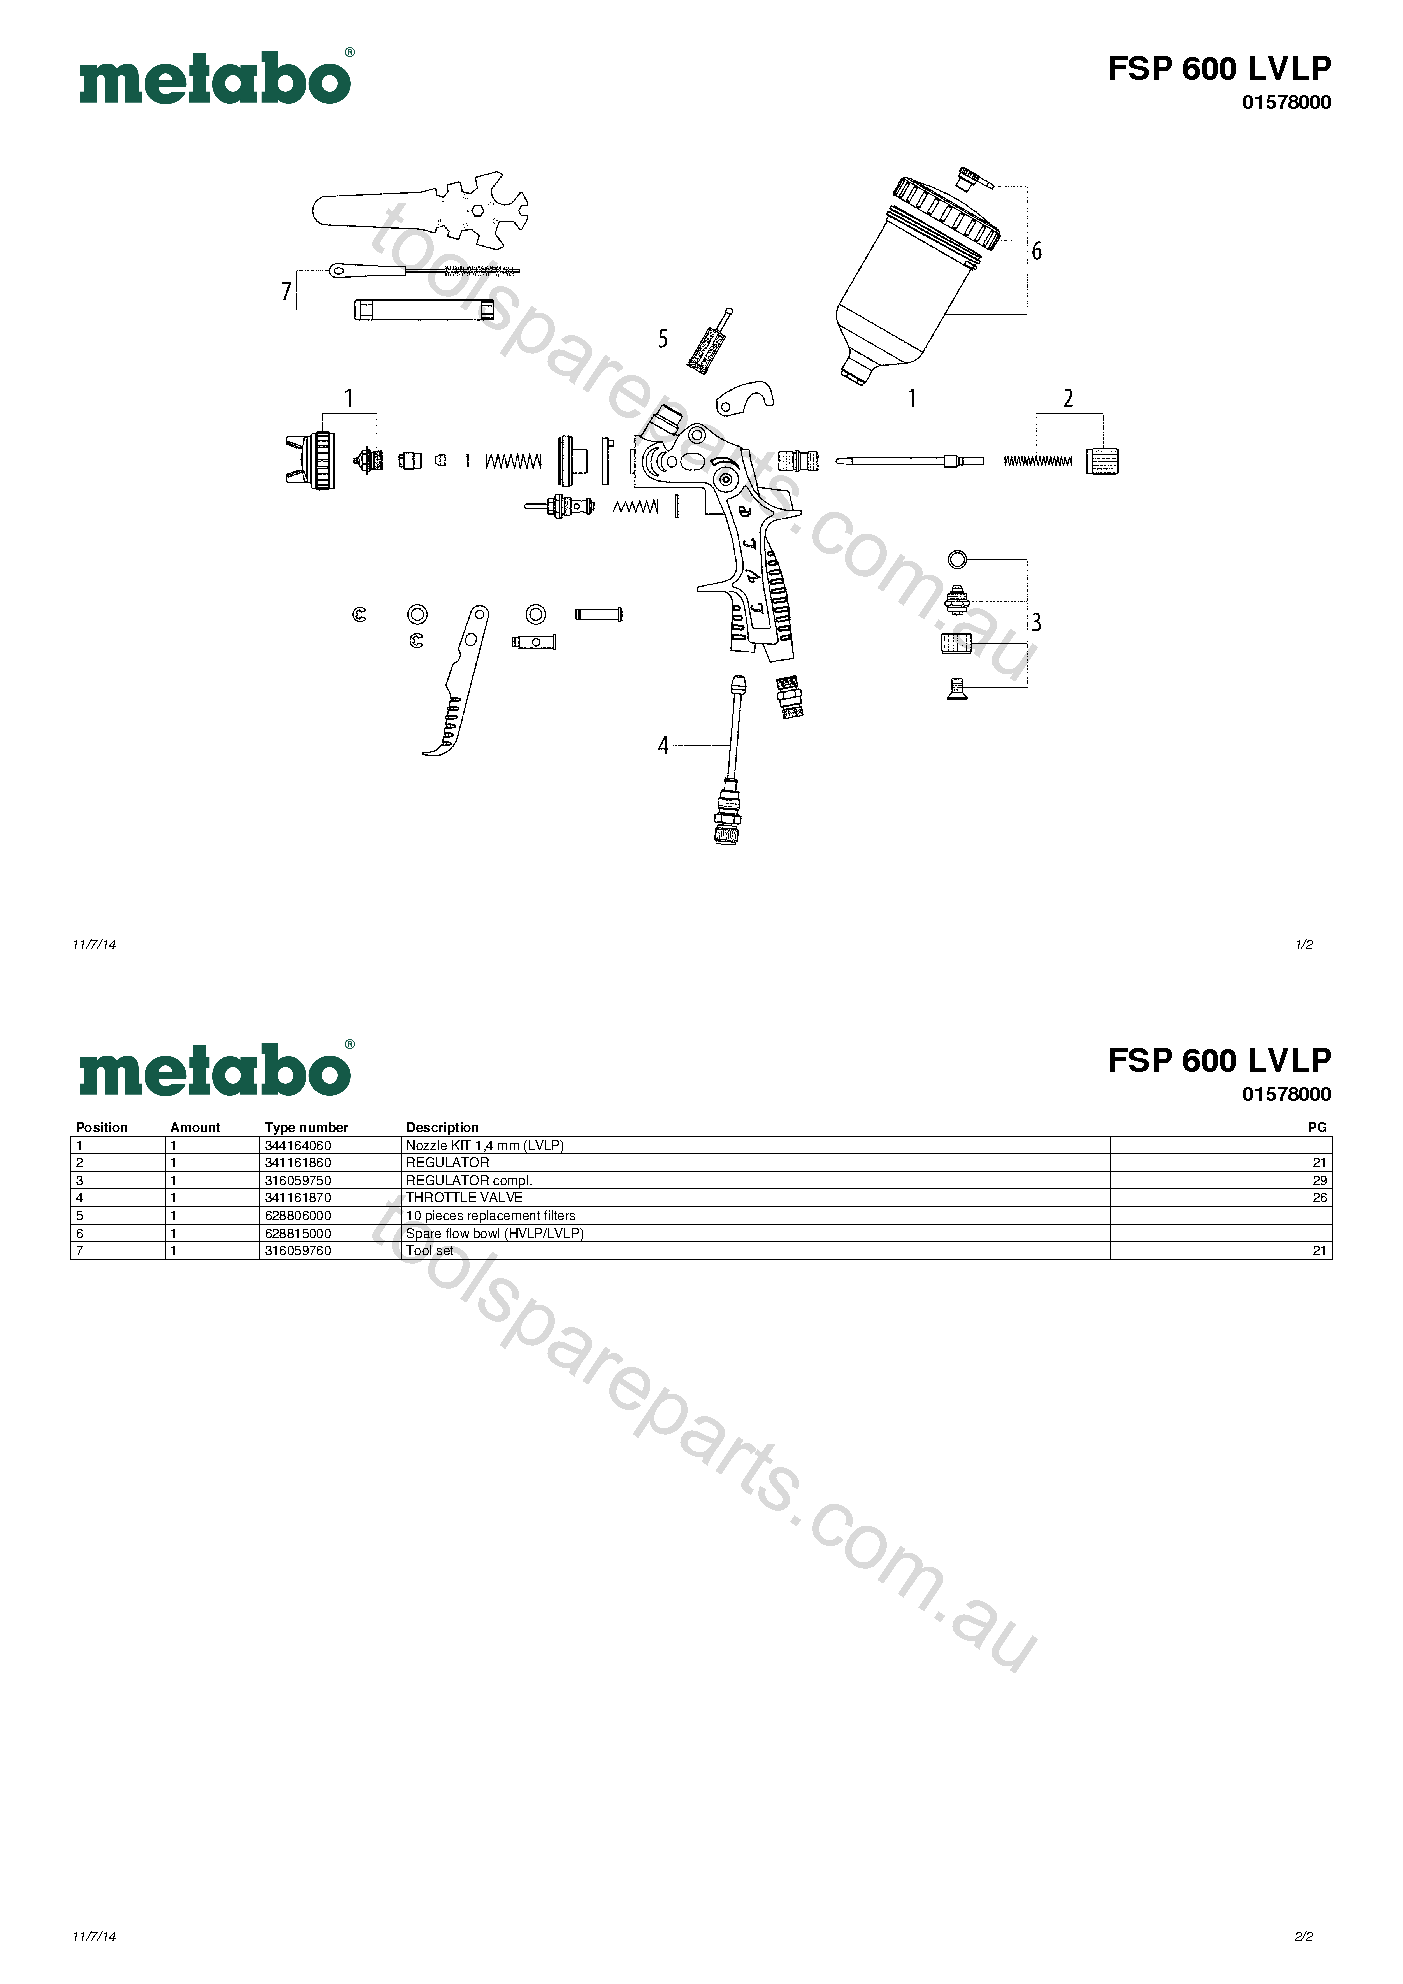 Metabo FSP 600 LVLP 01578000  Diagram 1